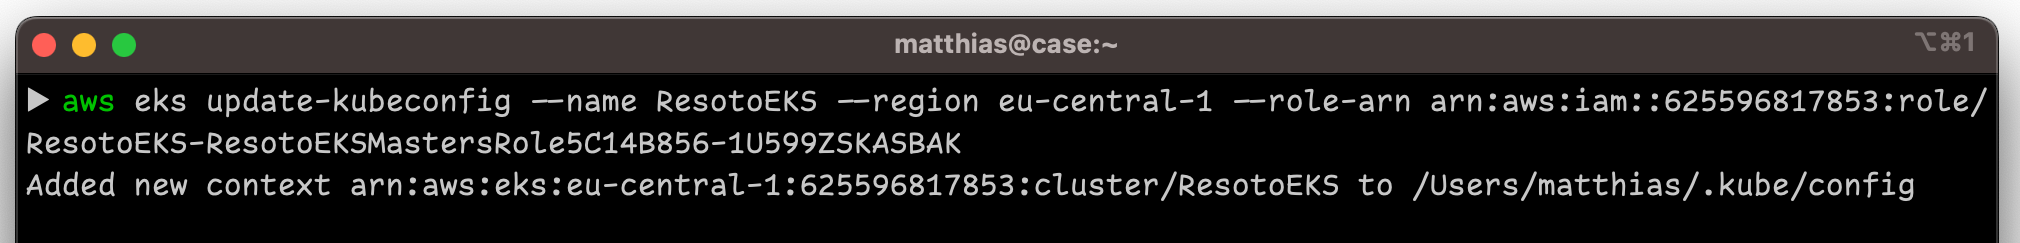 Screenshot of ResotoEKS config command in terminal